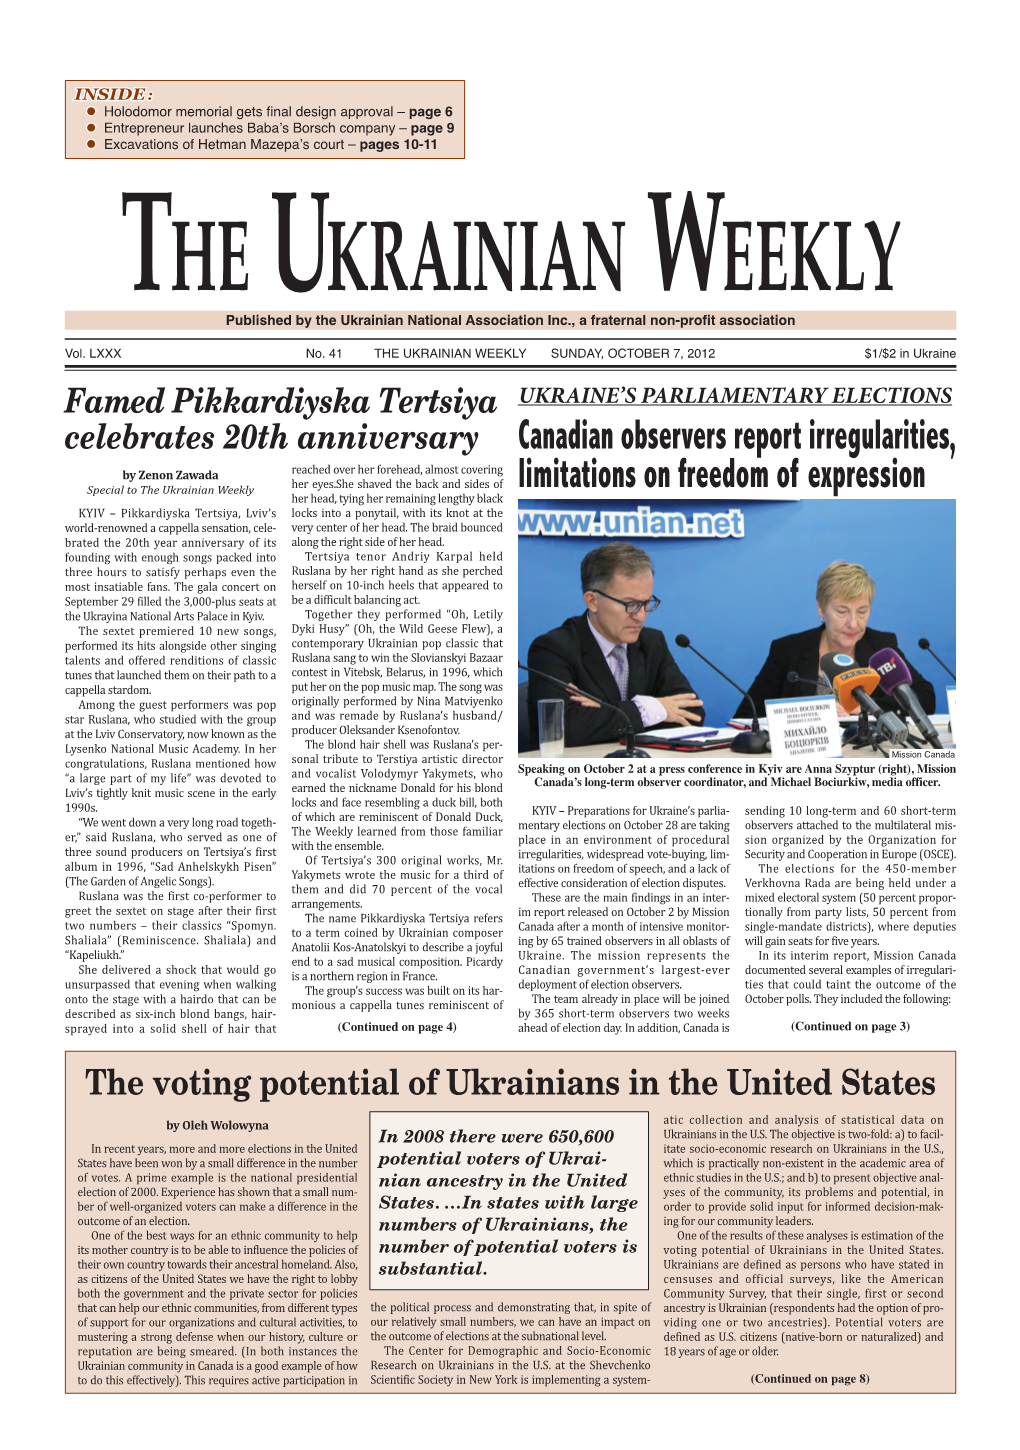 The Ukrainian Weekly 2012, No.41